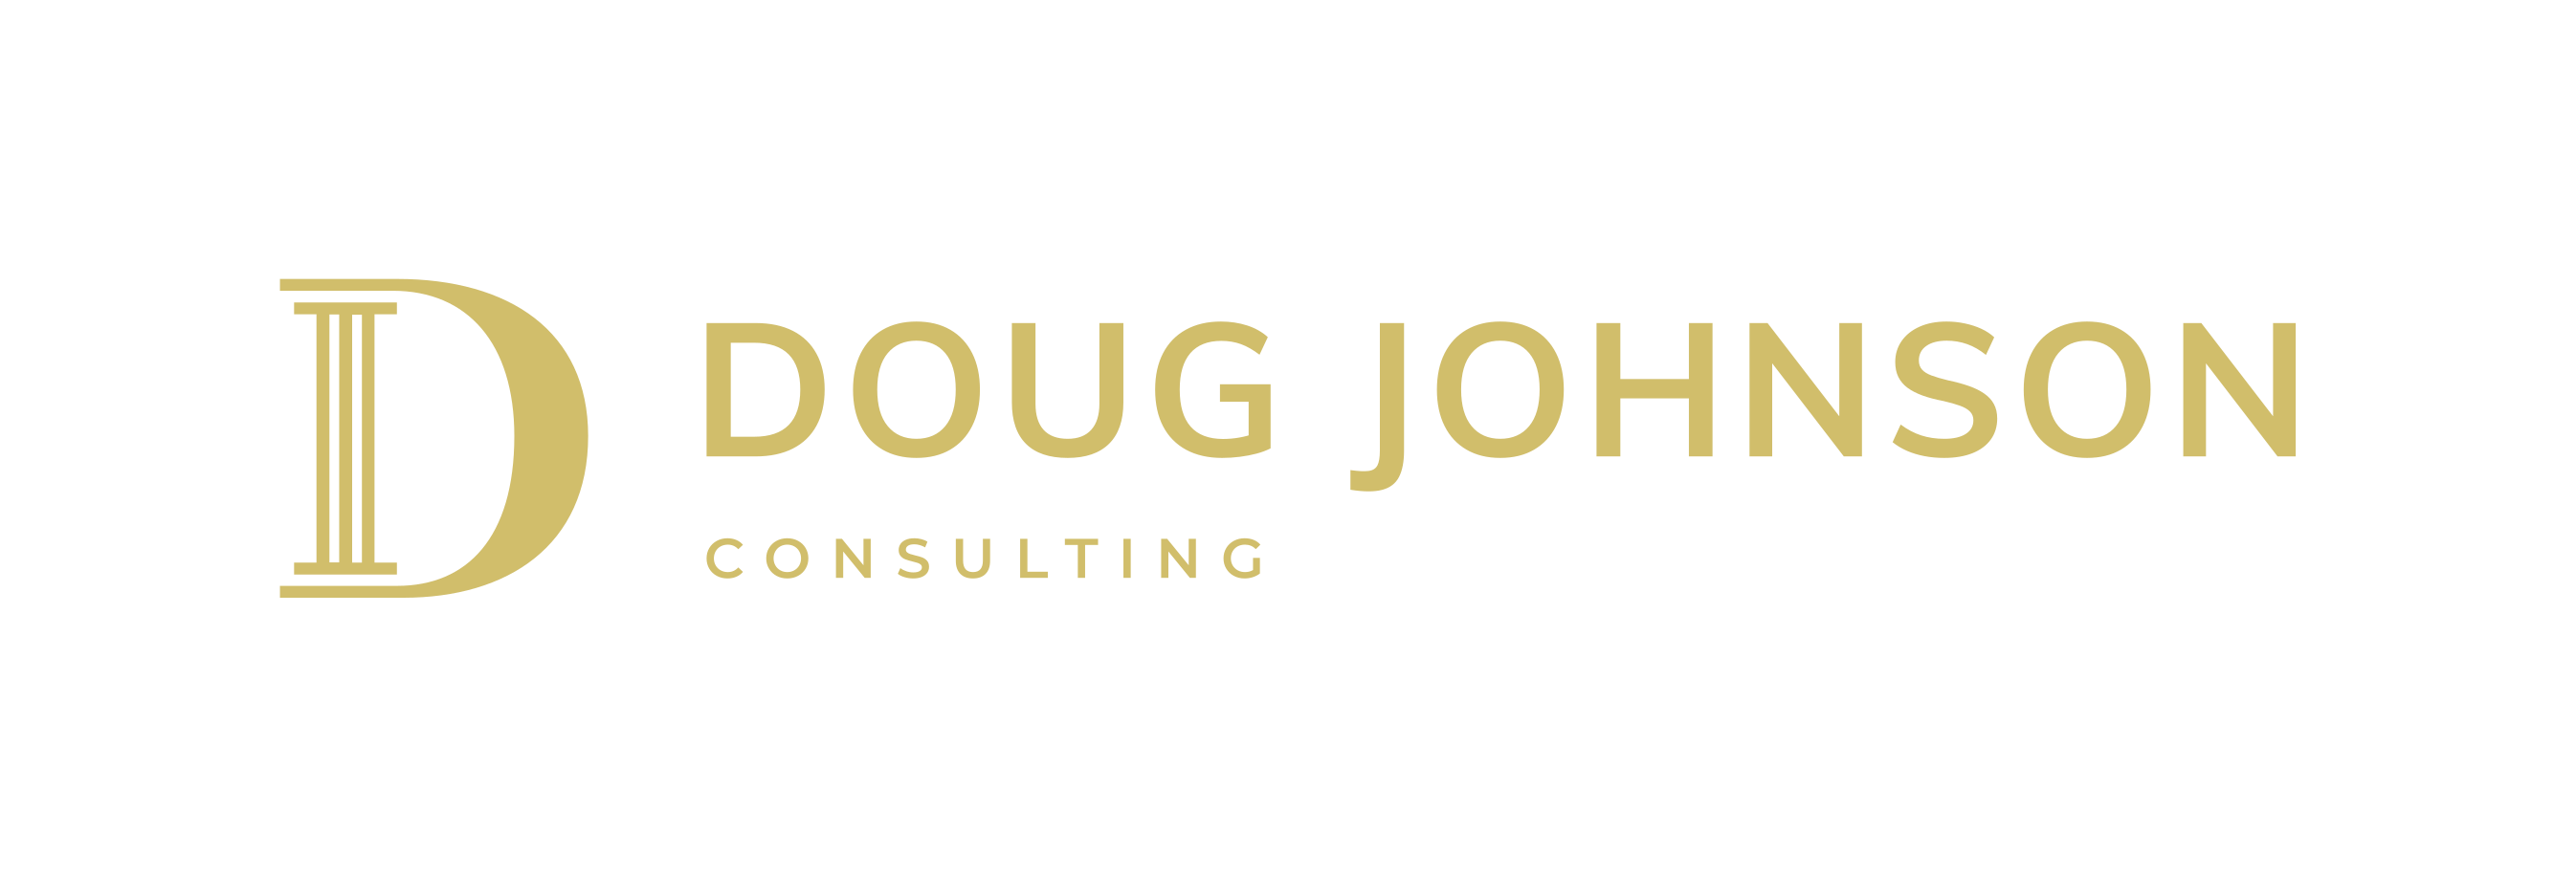 Doug Johnson Consulting